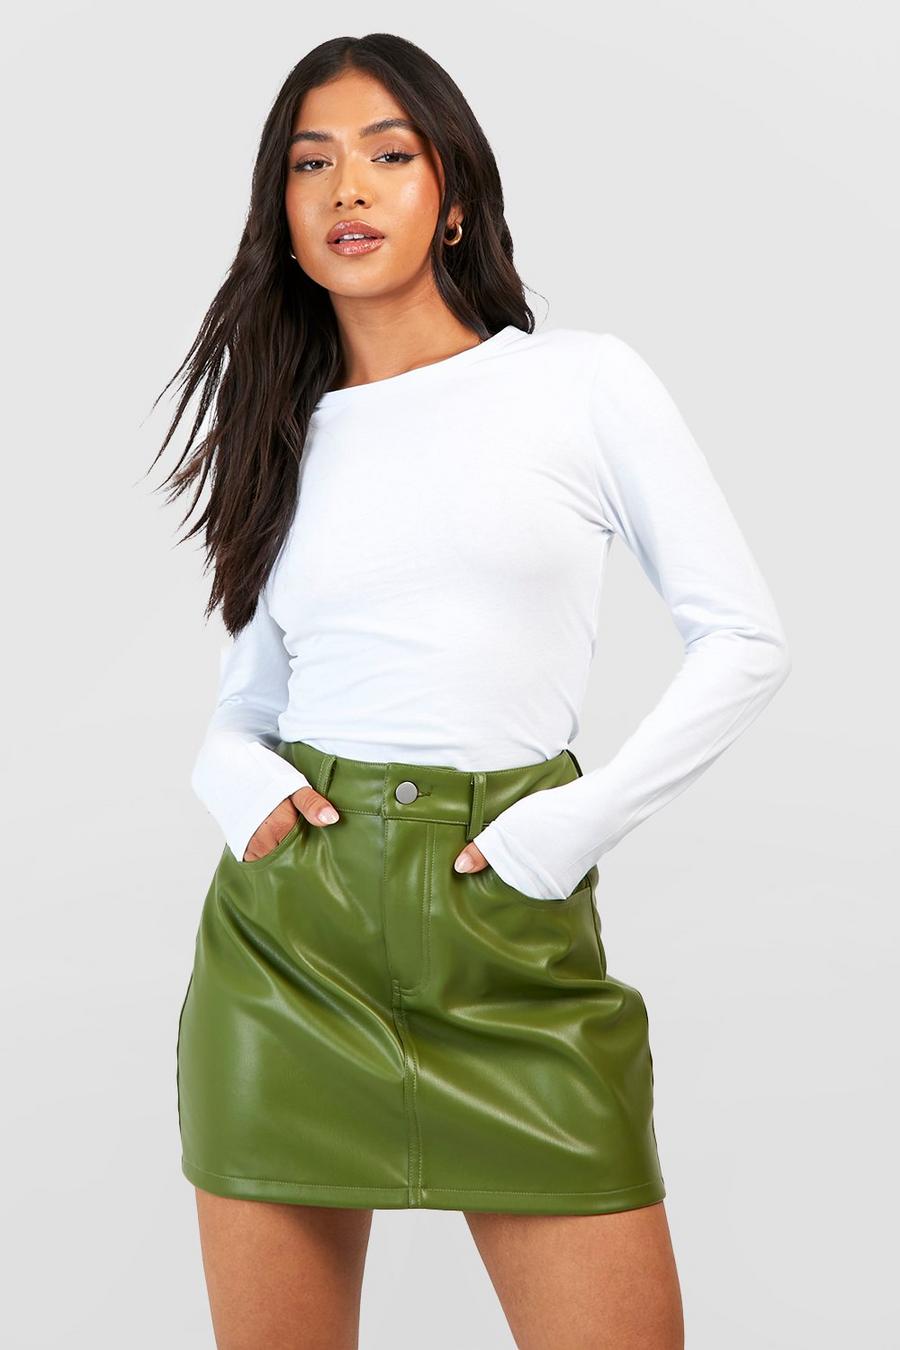 Asos Petite Pleated Skater Skirt In Leather Look, $57, Asos